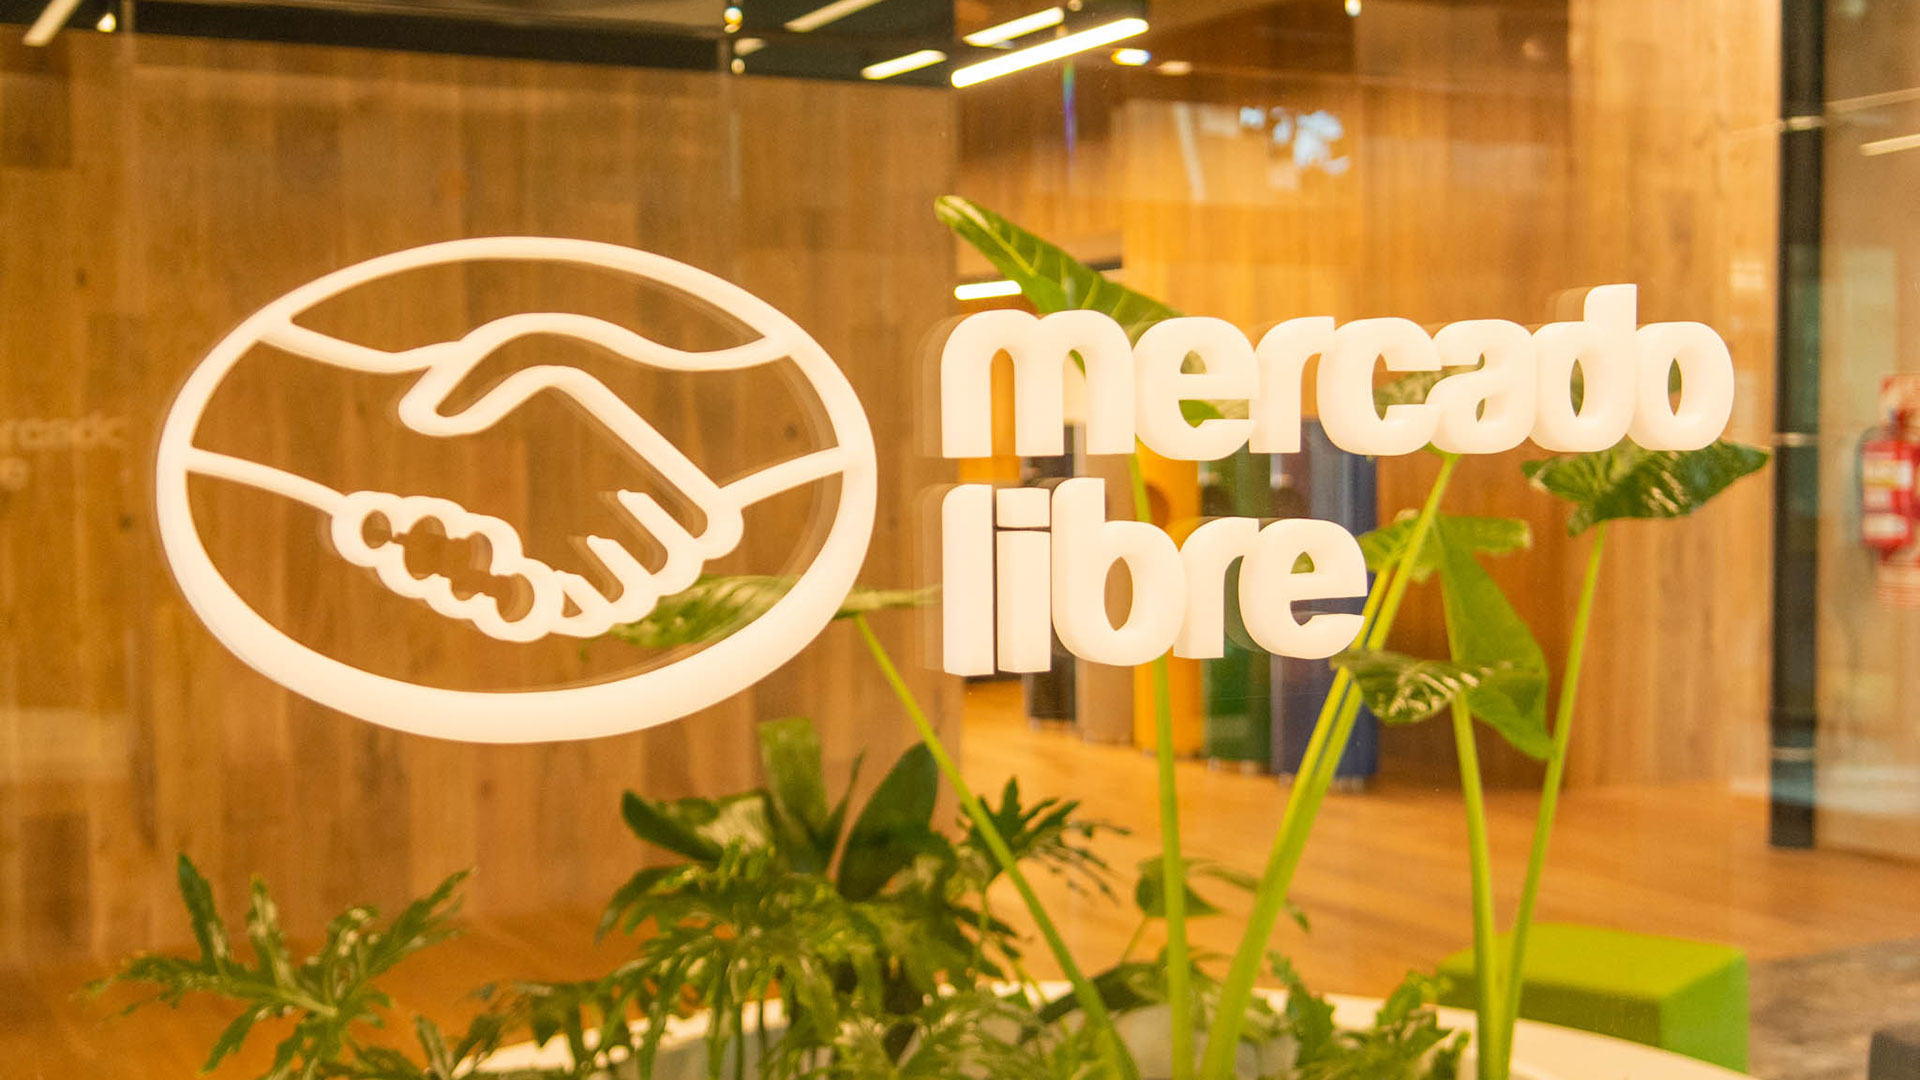 Mercado Libre, la empresa de mayor market cap de la Argentina (Mercado Libre)